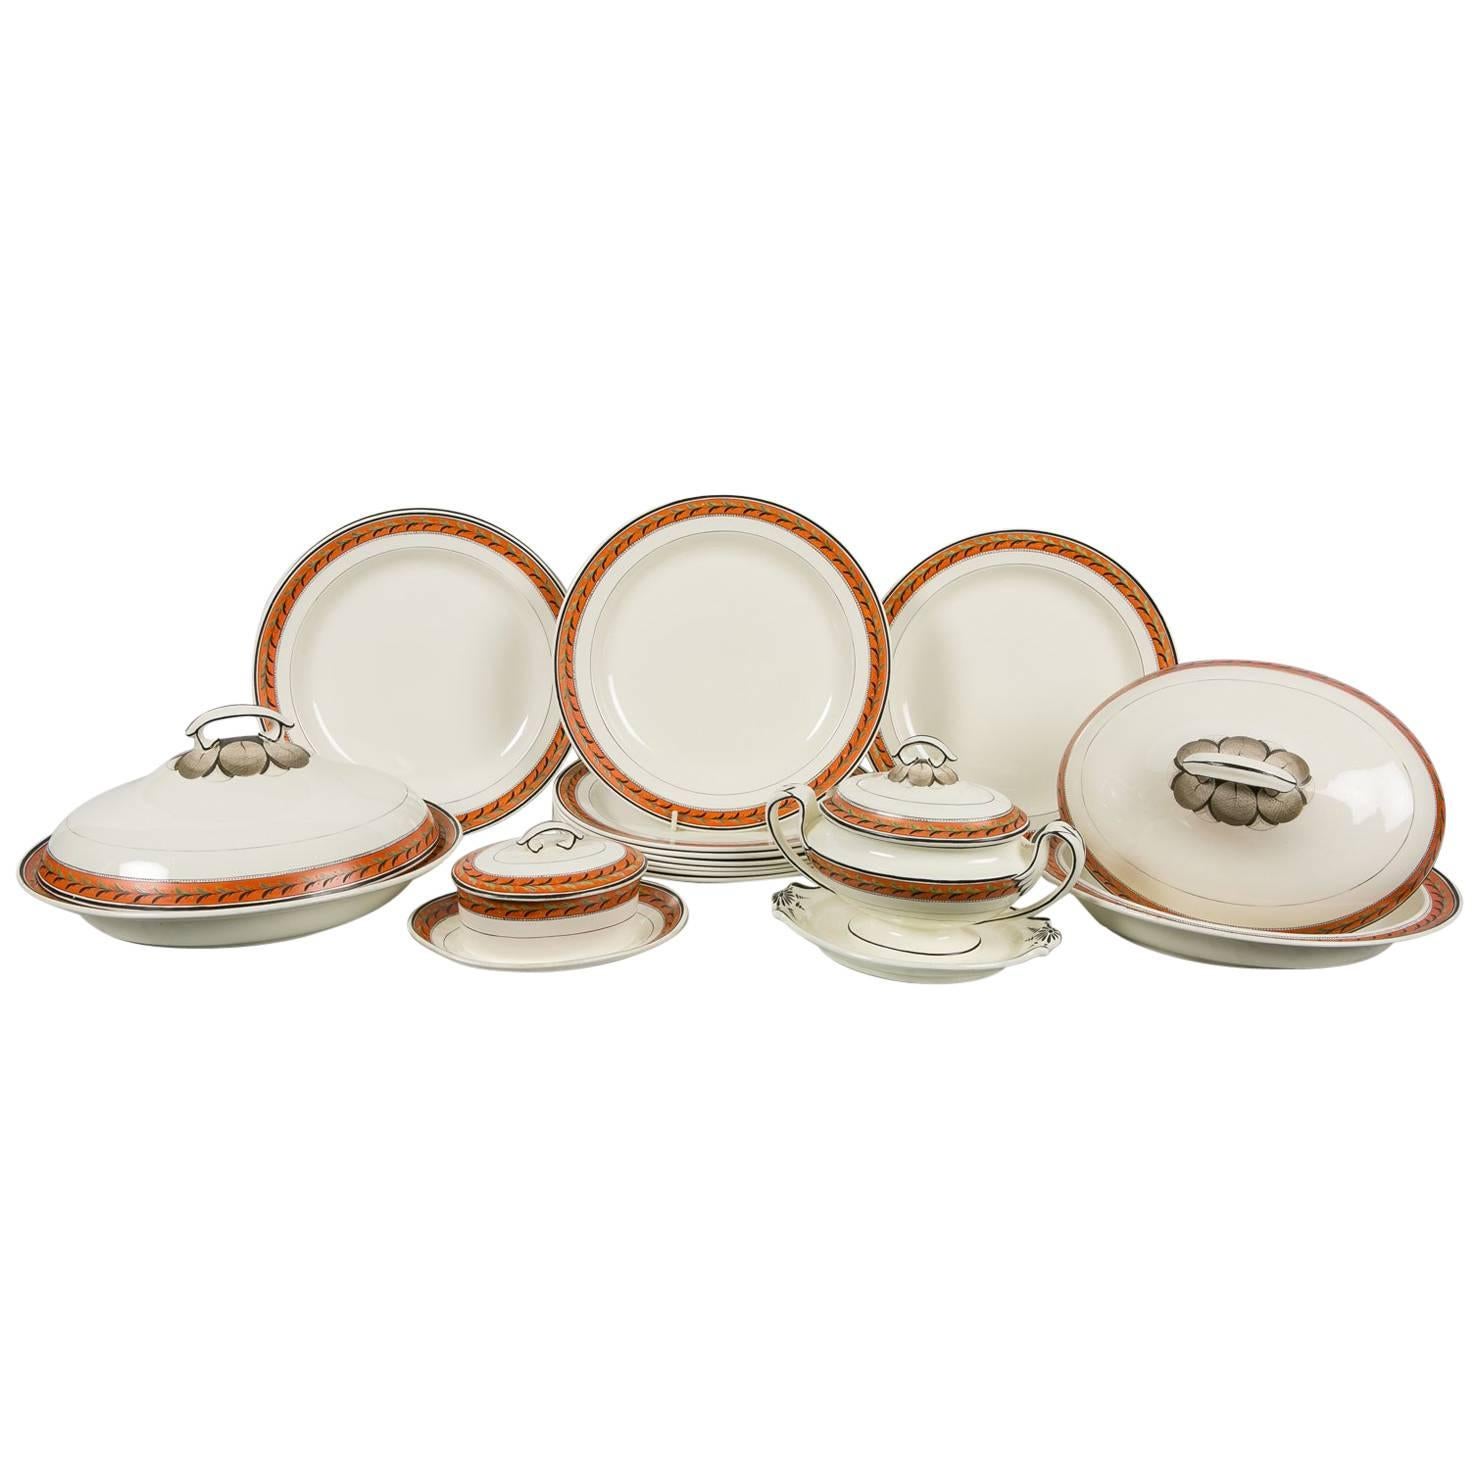 Antique Creamware Set of Dishes with Orange Borders